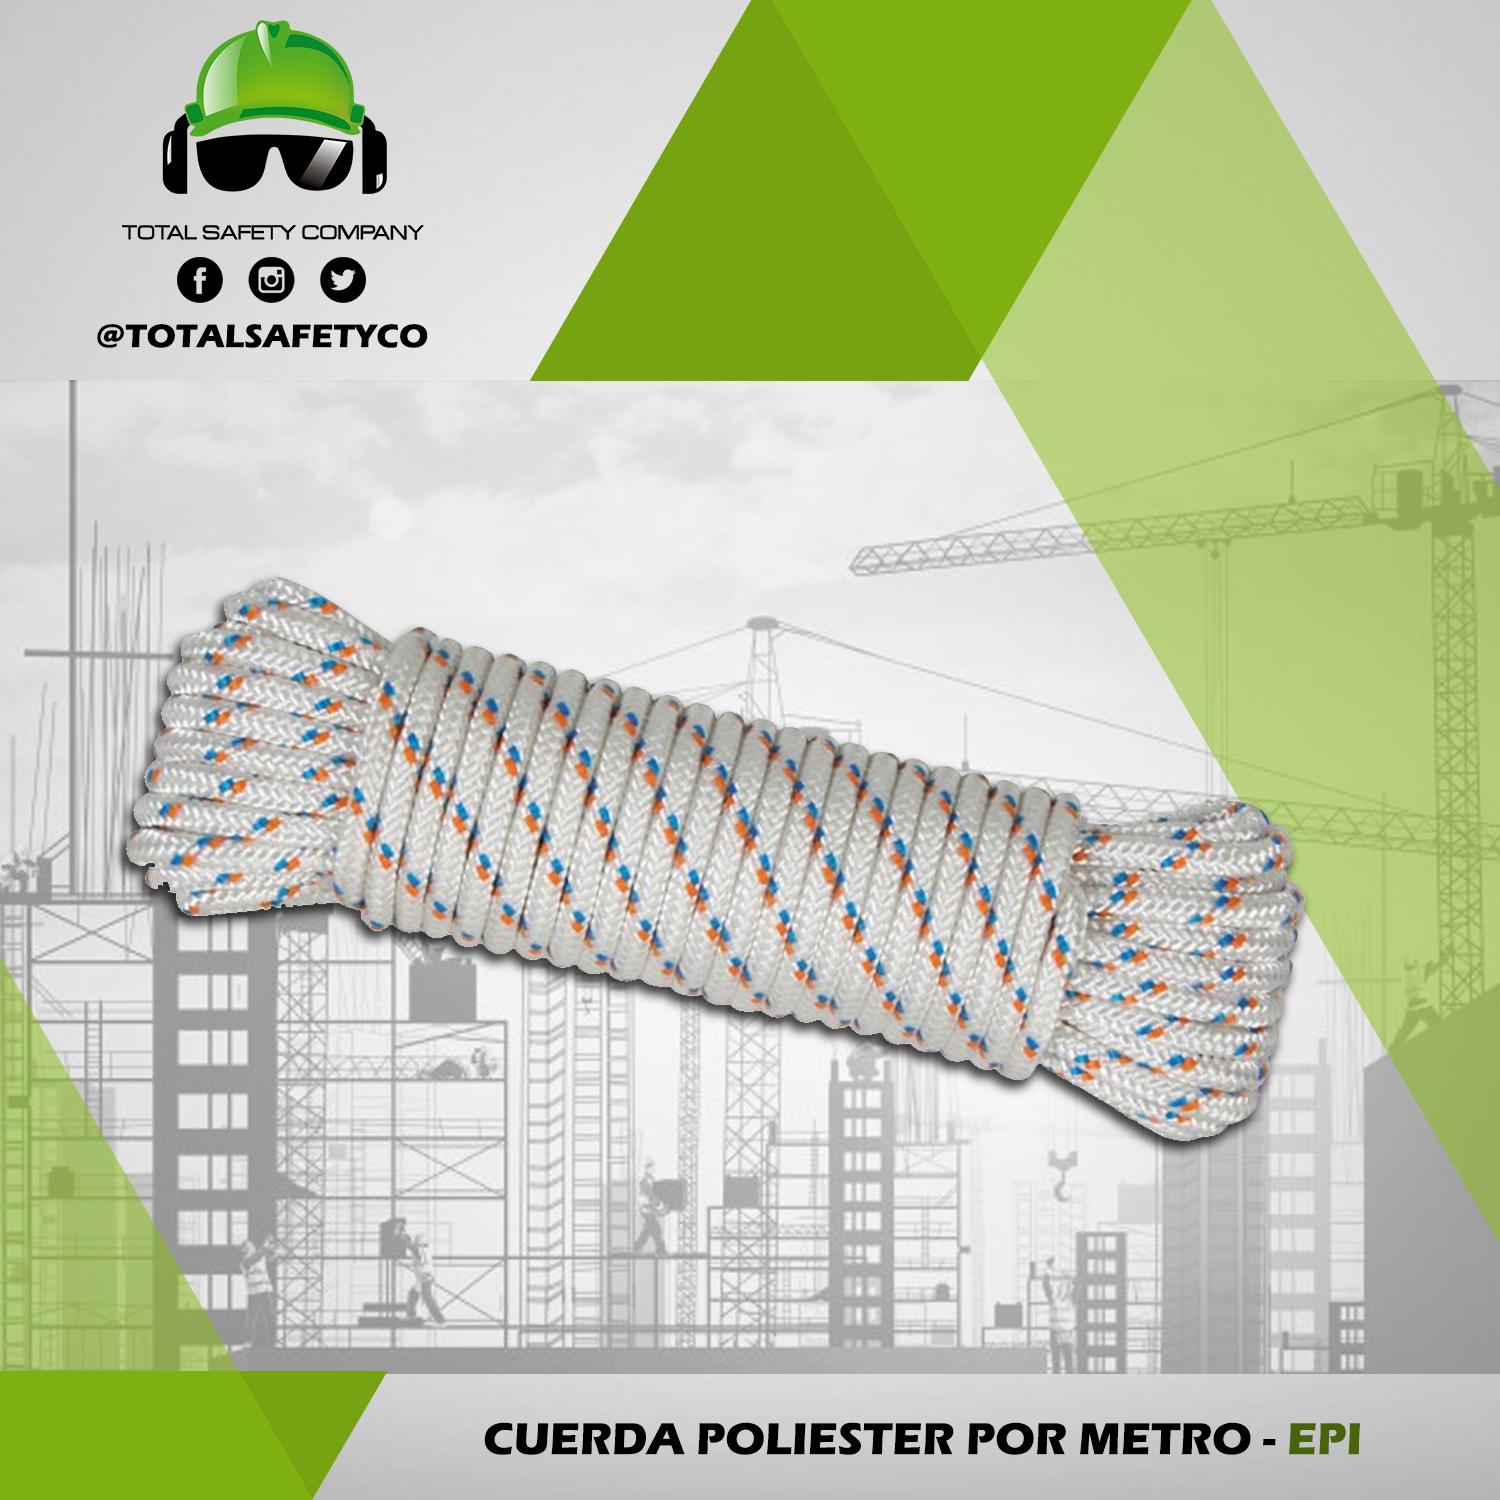 Cuerda poliester por metro - EPI